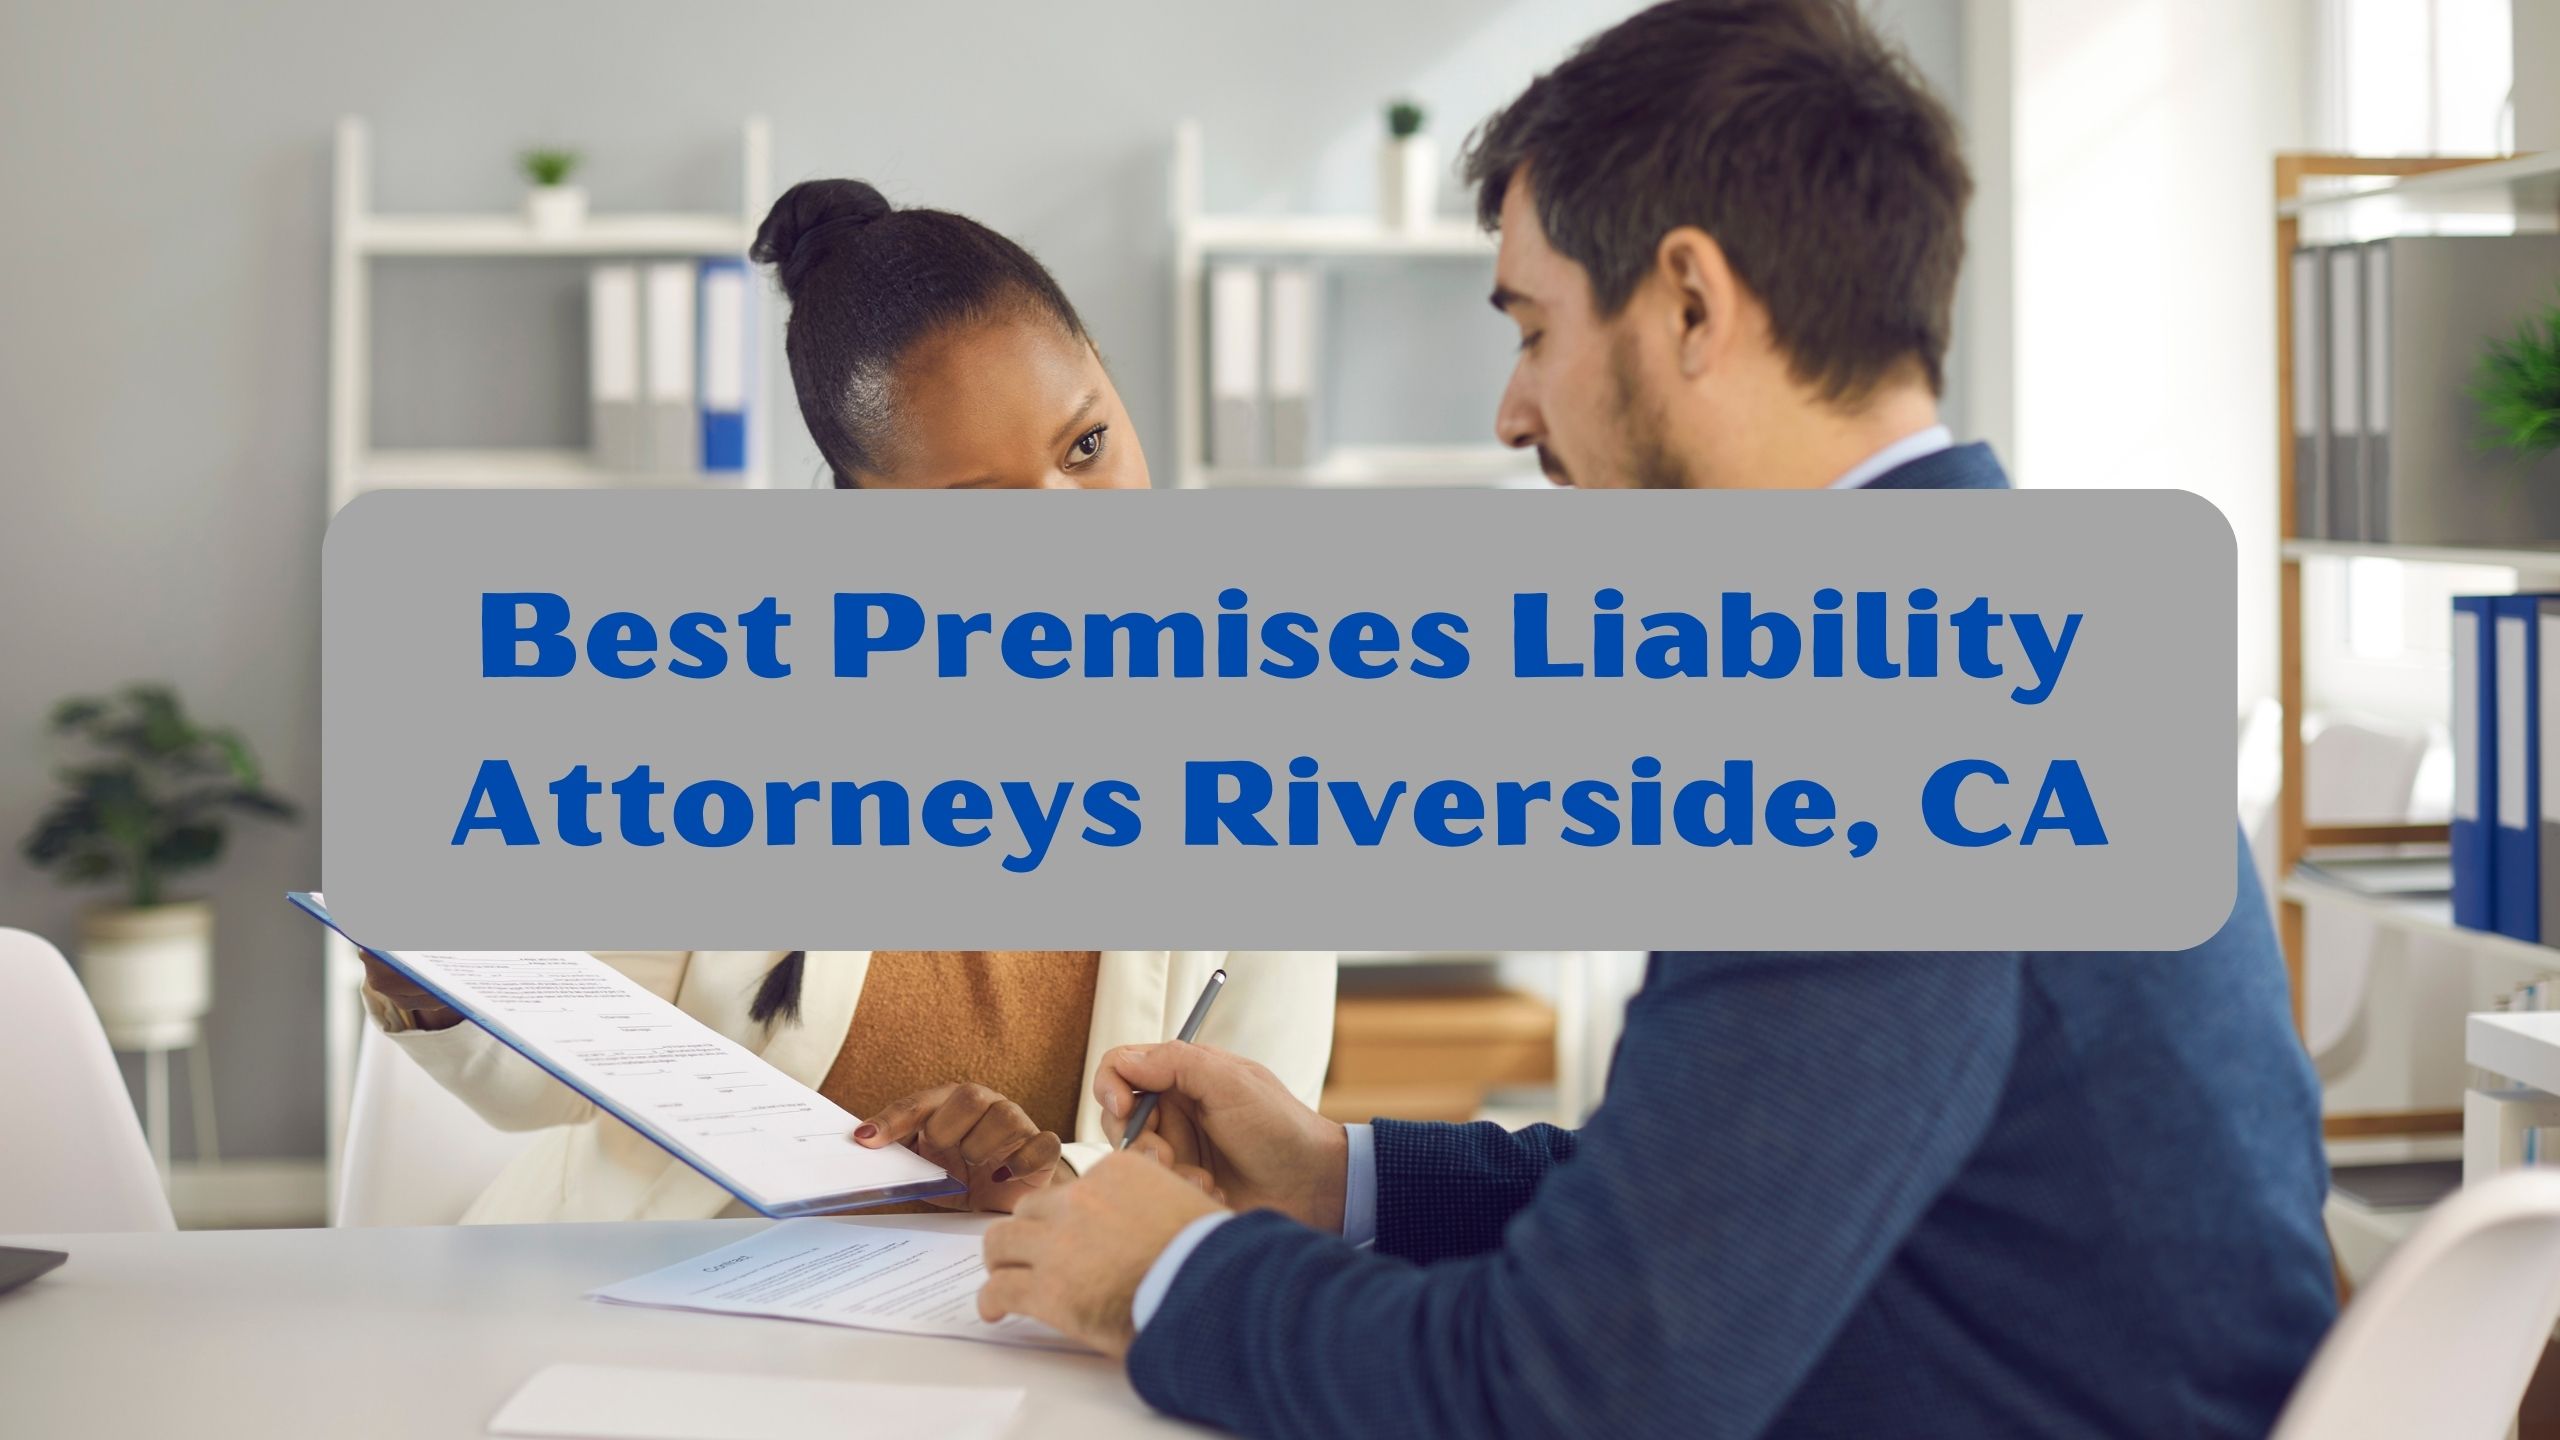 Best Premises Liability Attorneys Riverside